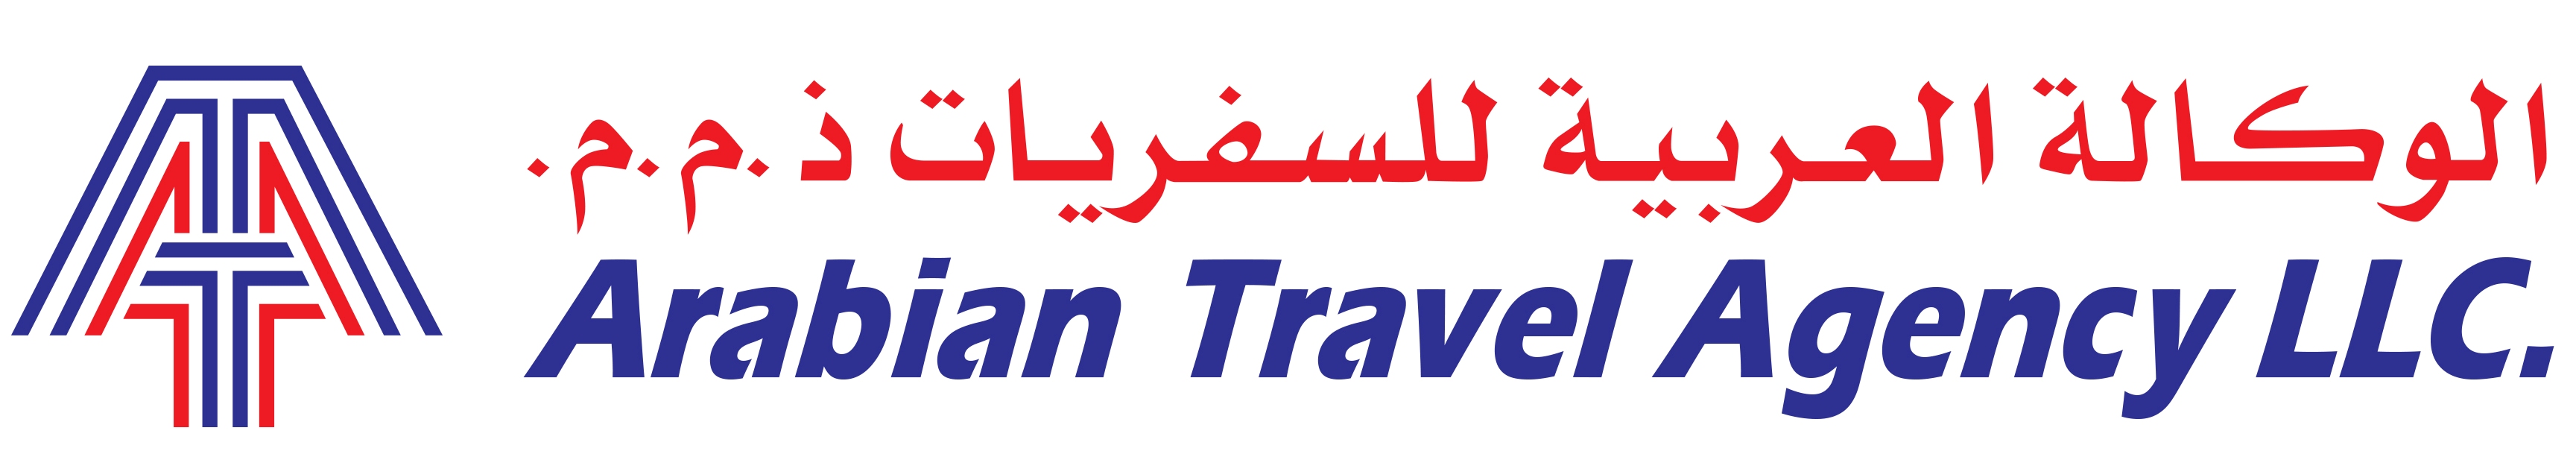 Arabian Travel Agency